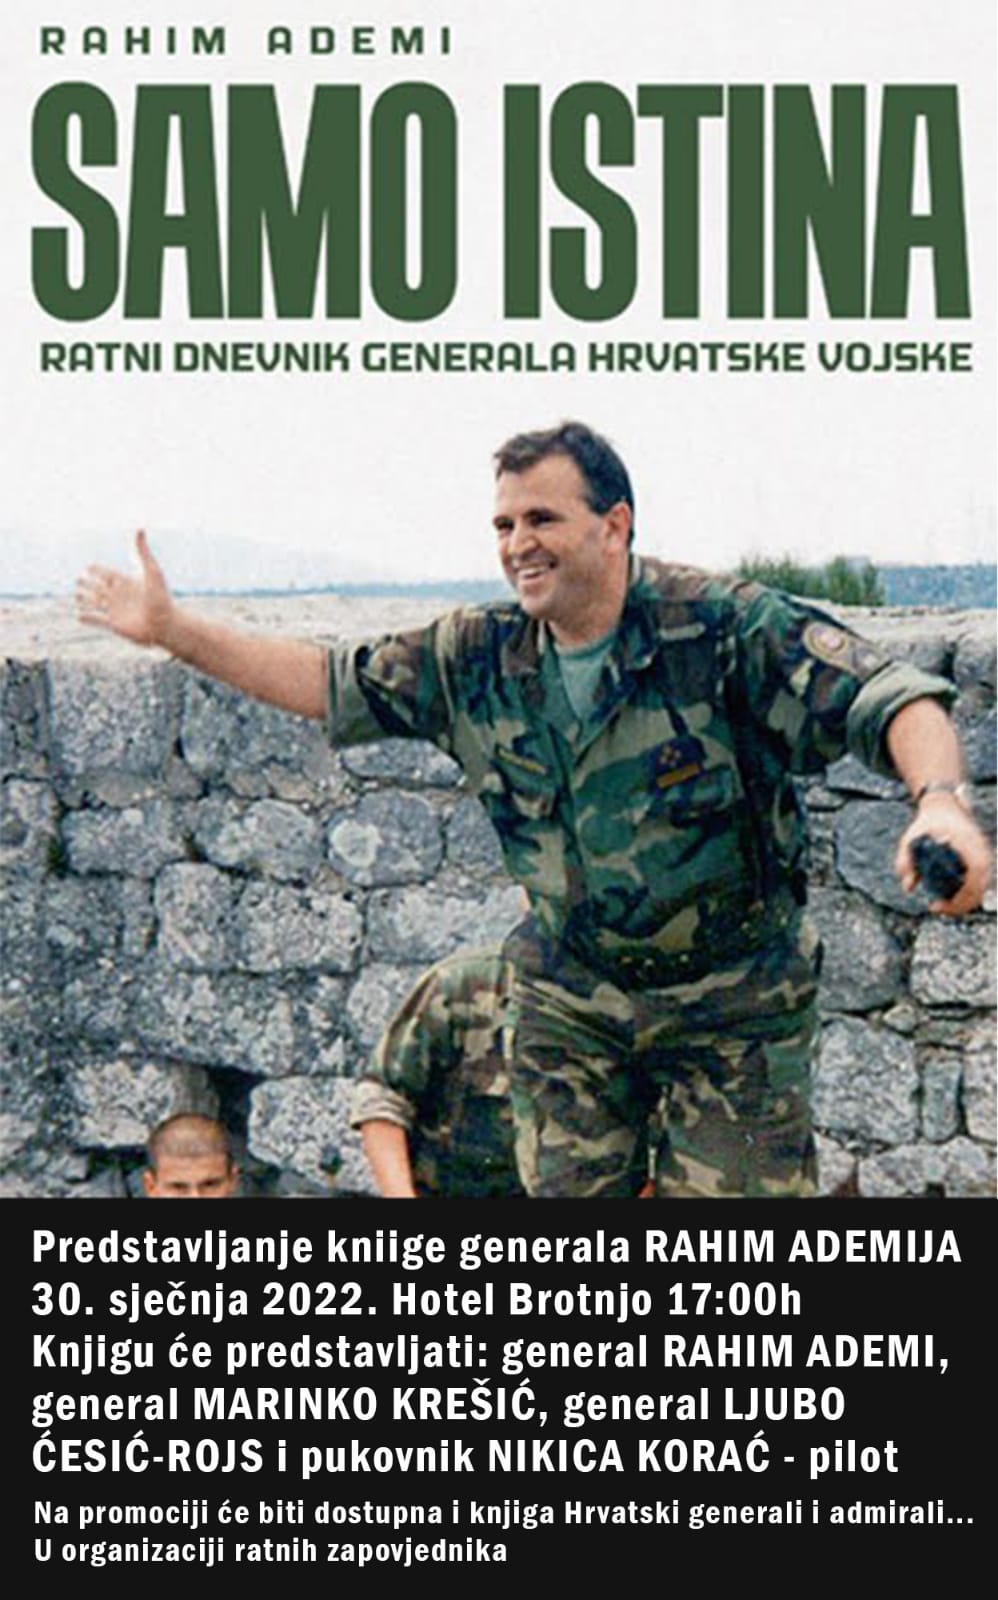 Samo istina - ratni dnevnik generala hrvatske vojske